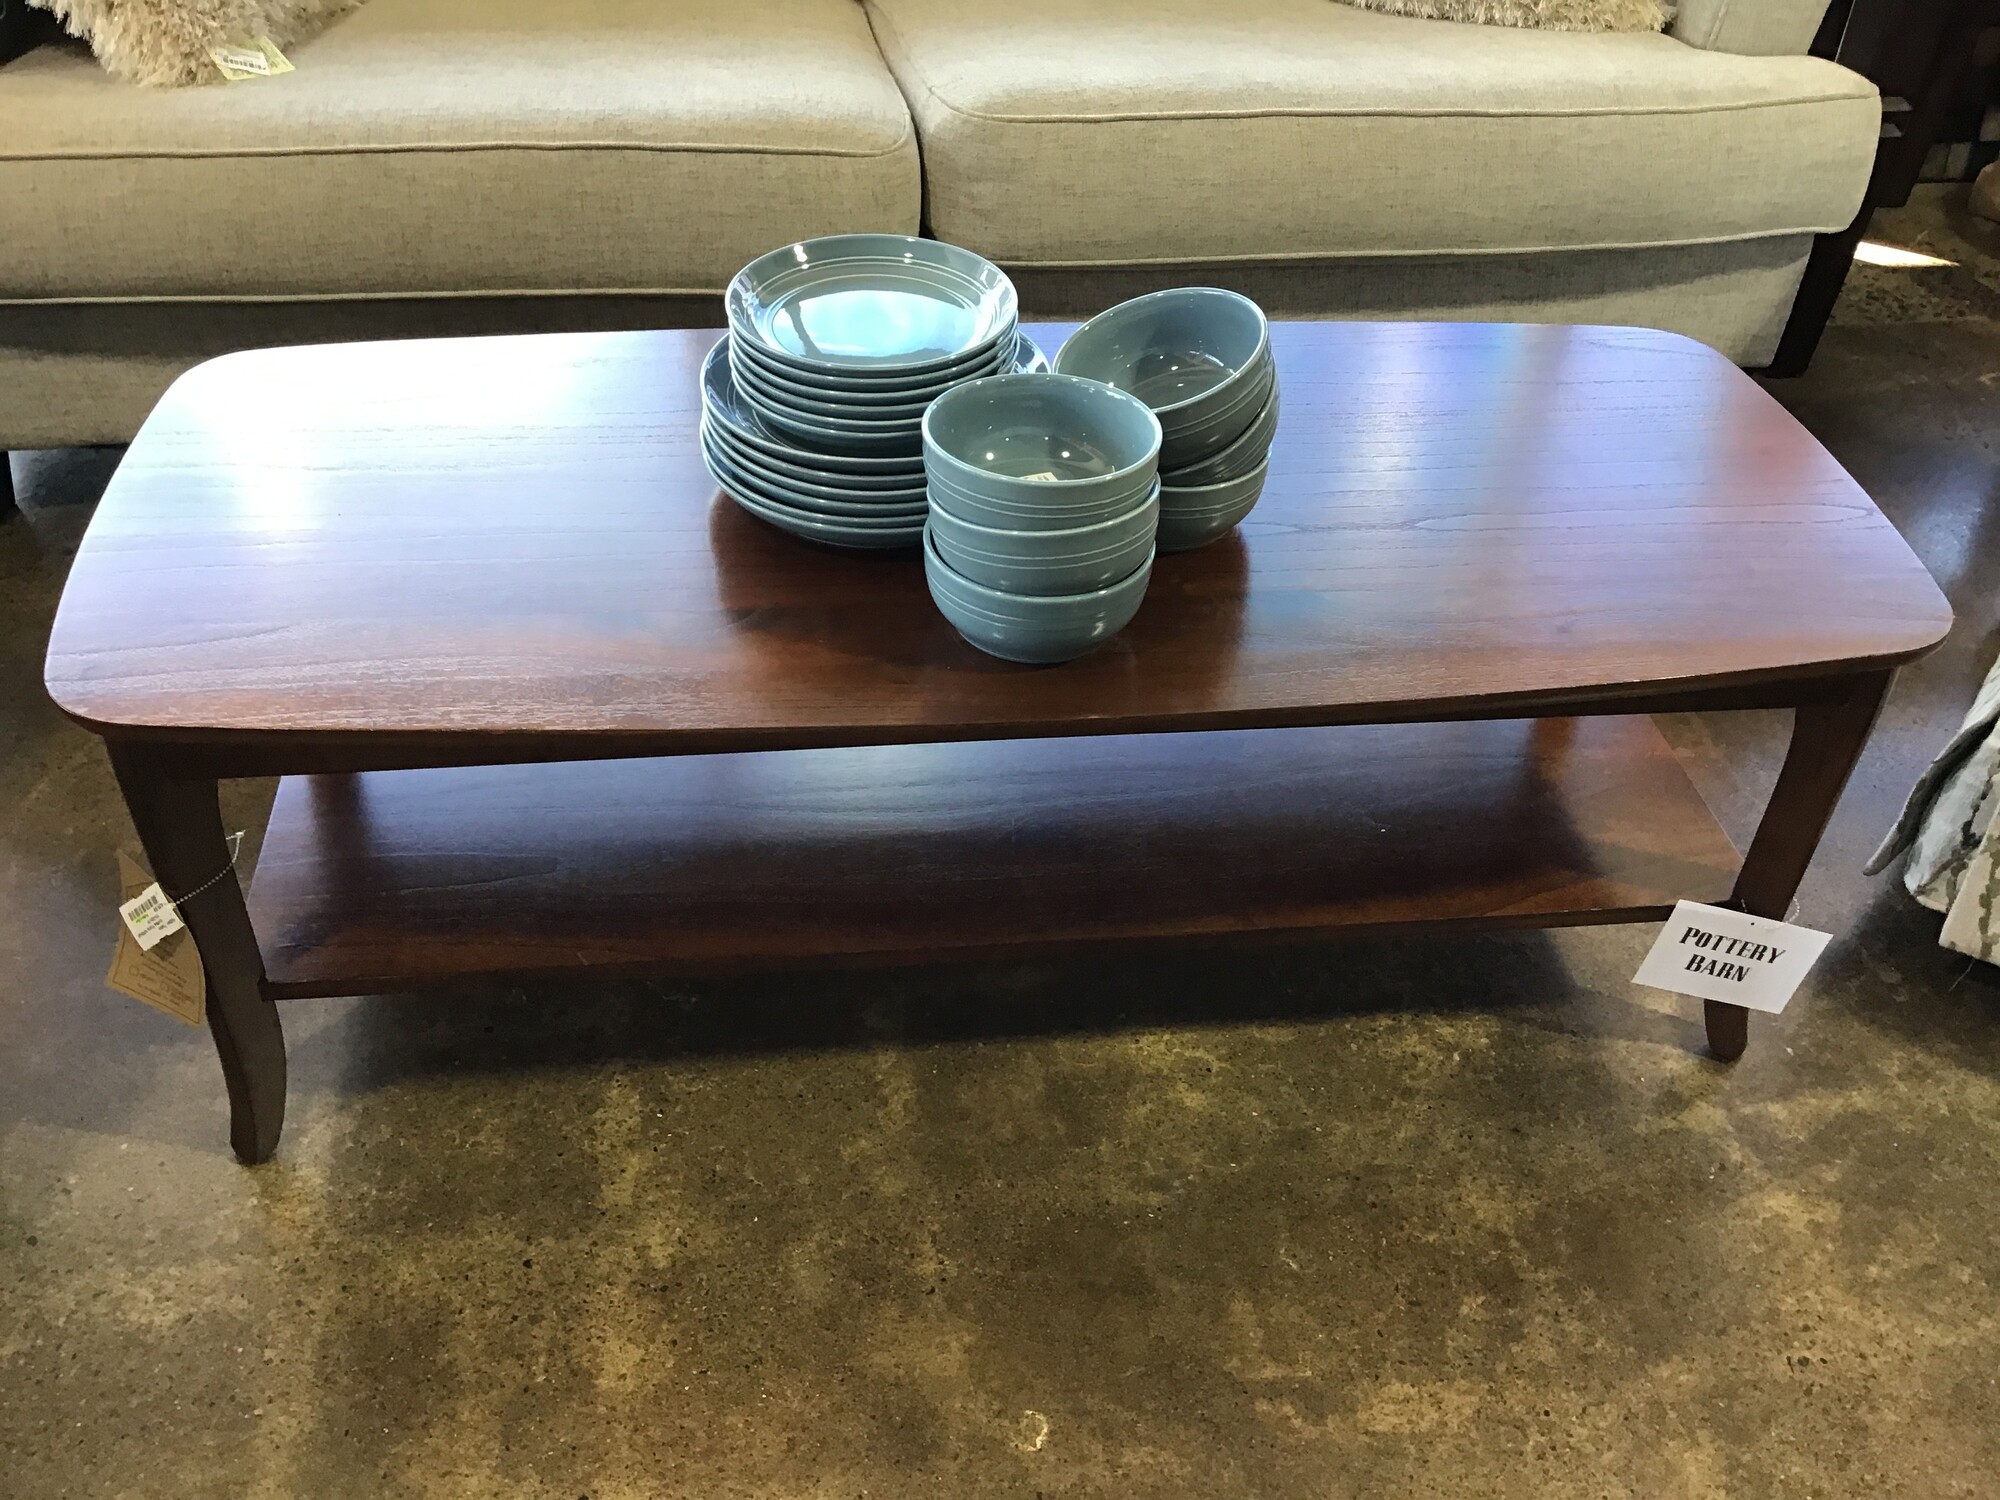 Pottery Barn
Coffee Table w/ lower shelf
Brown Wood

Dimensions:  52x22x18